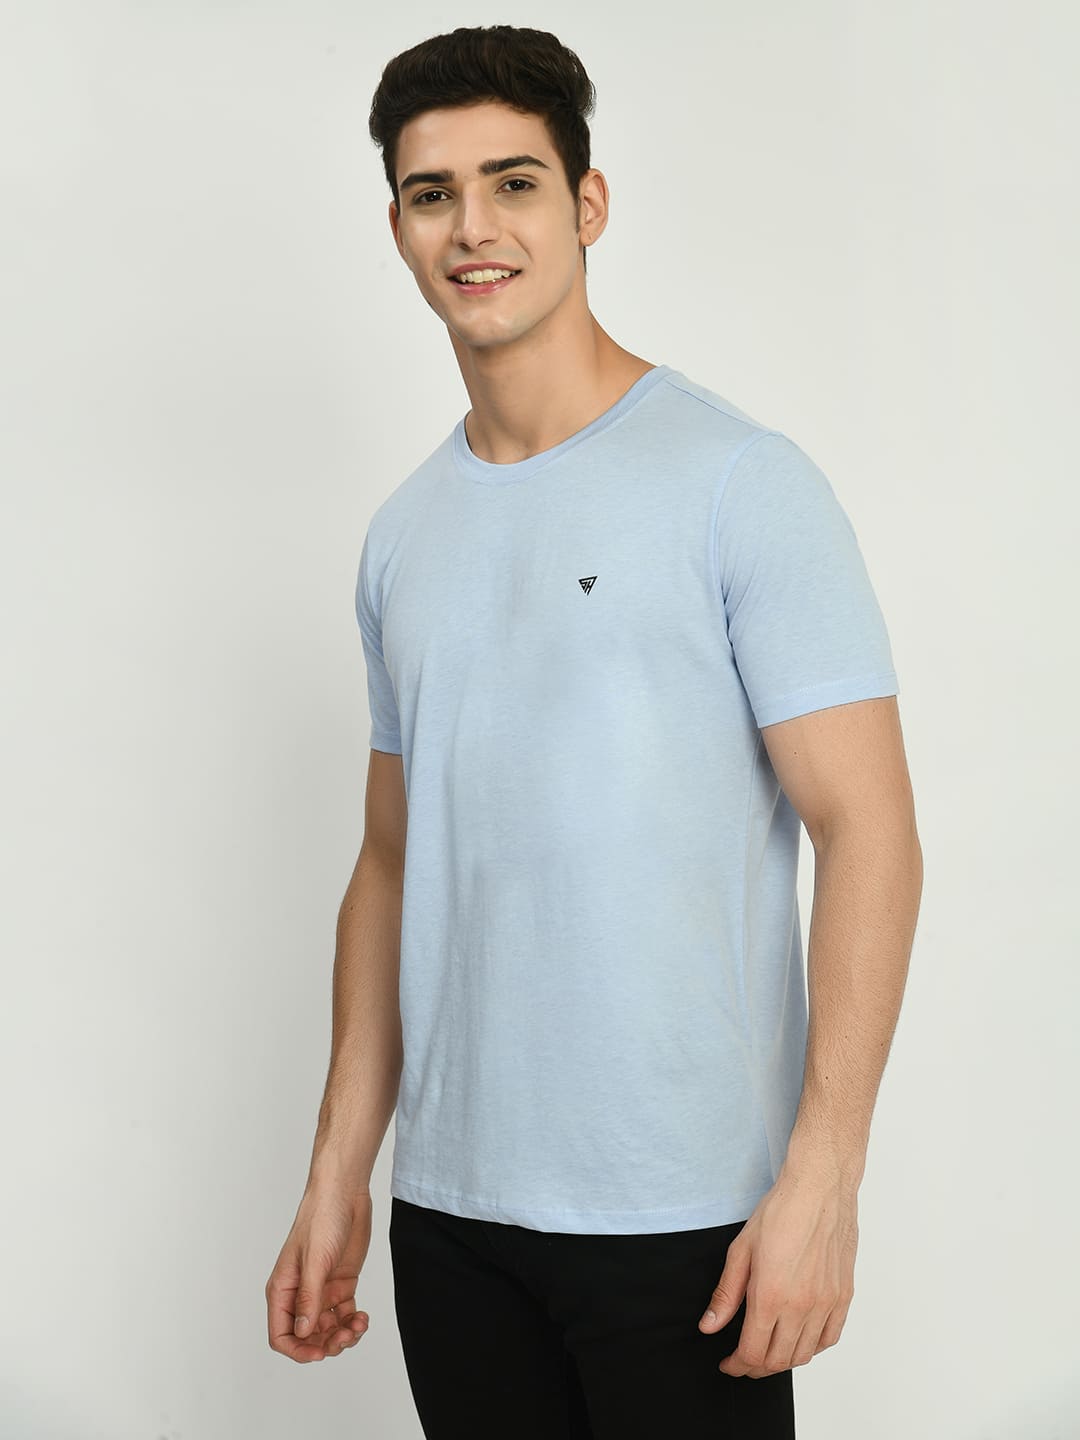 Men's Basic Sky Blue Round Neck T-Shirt